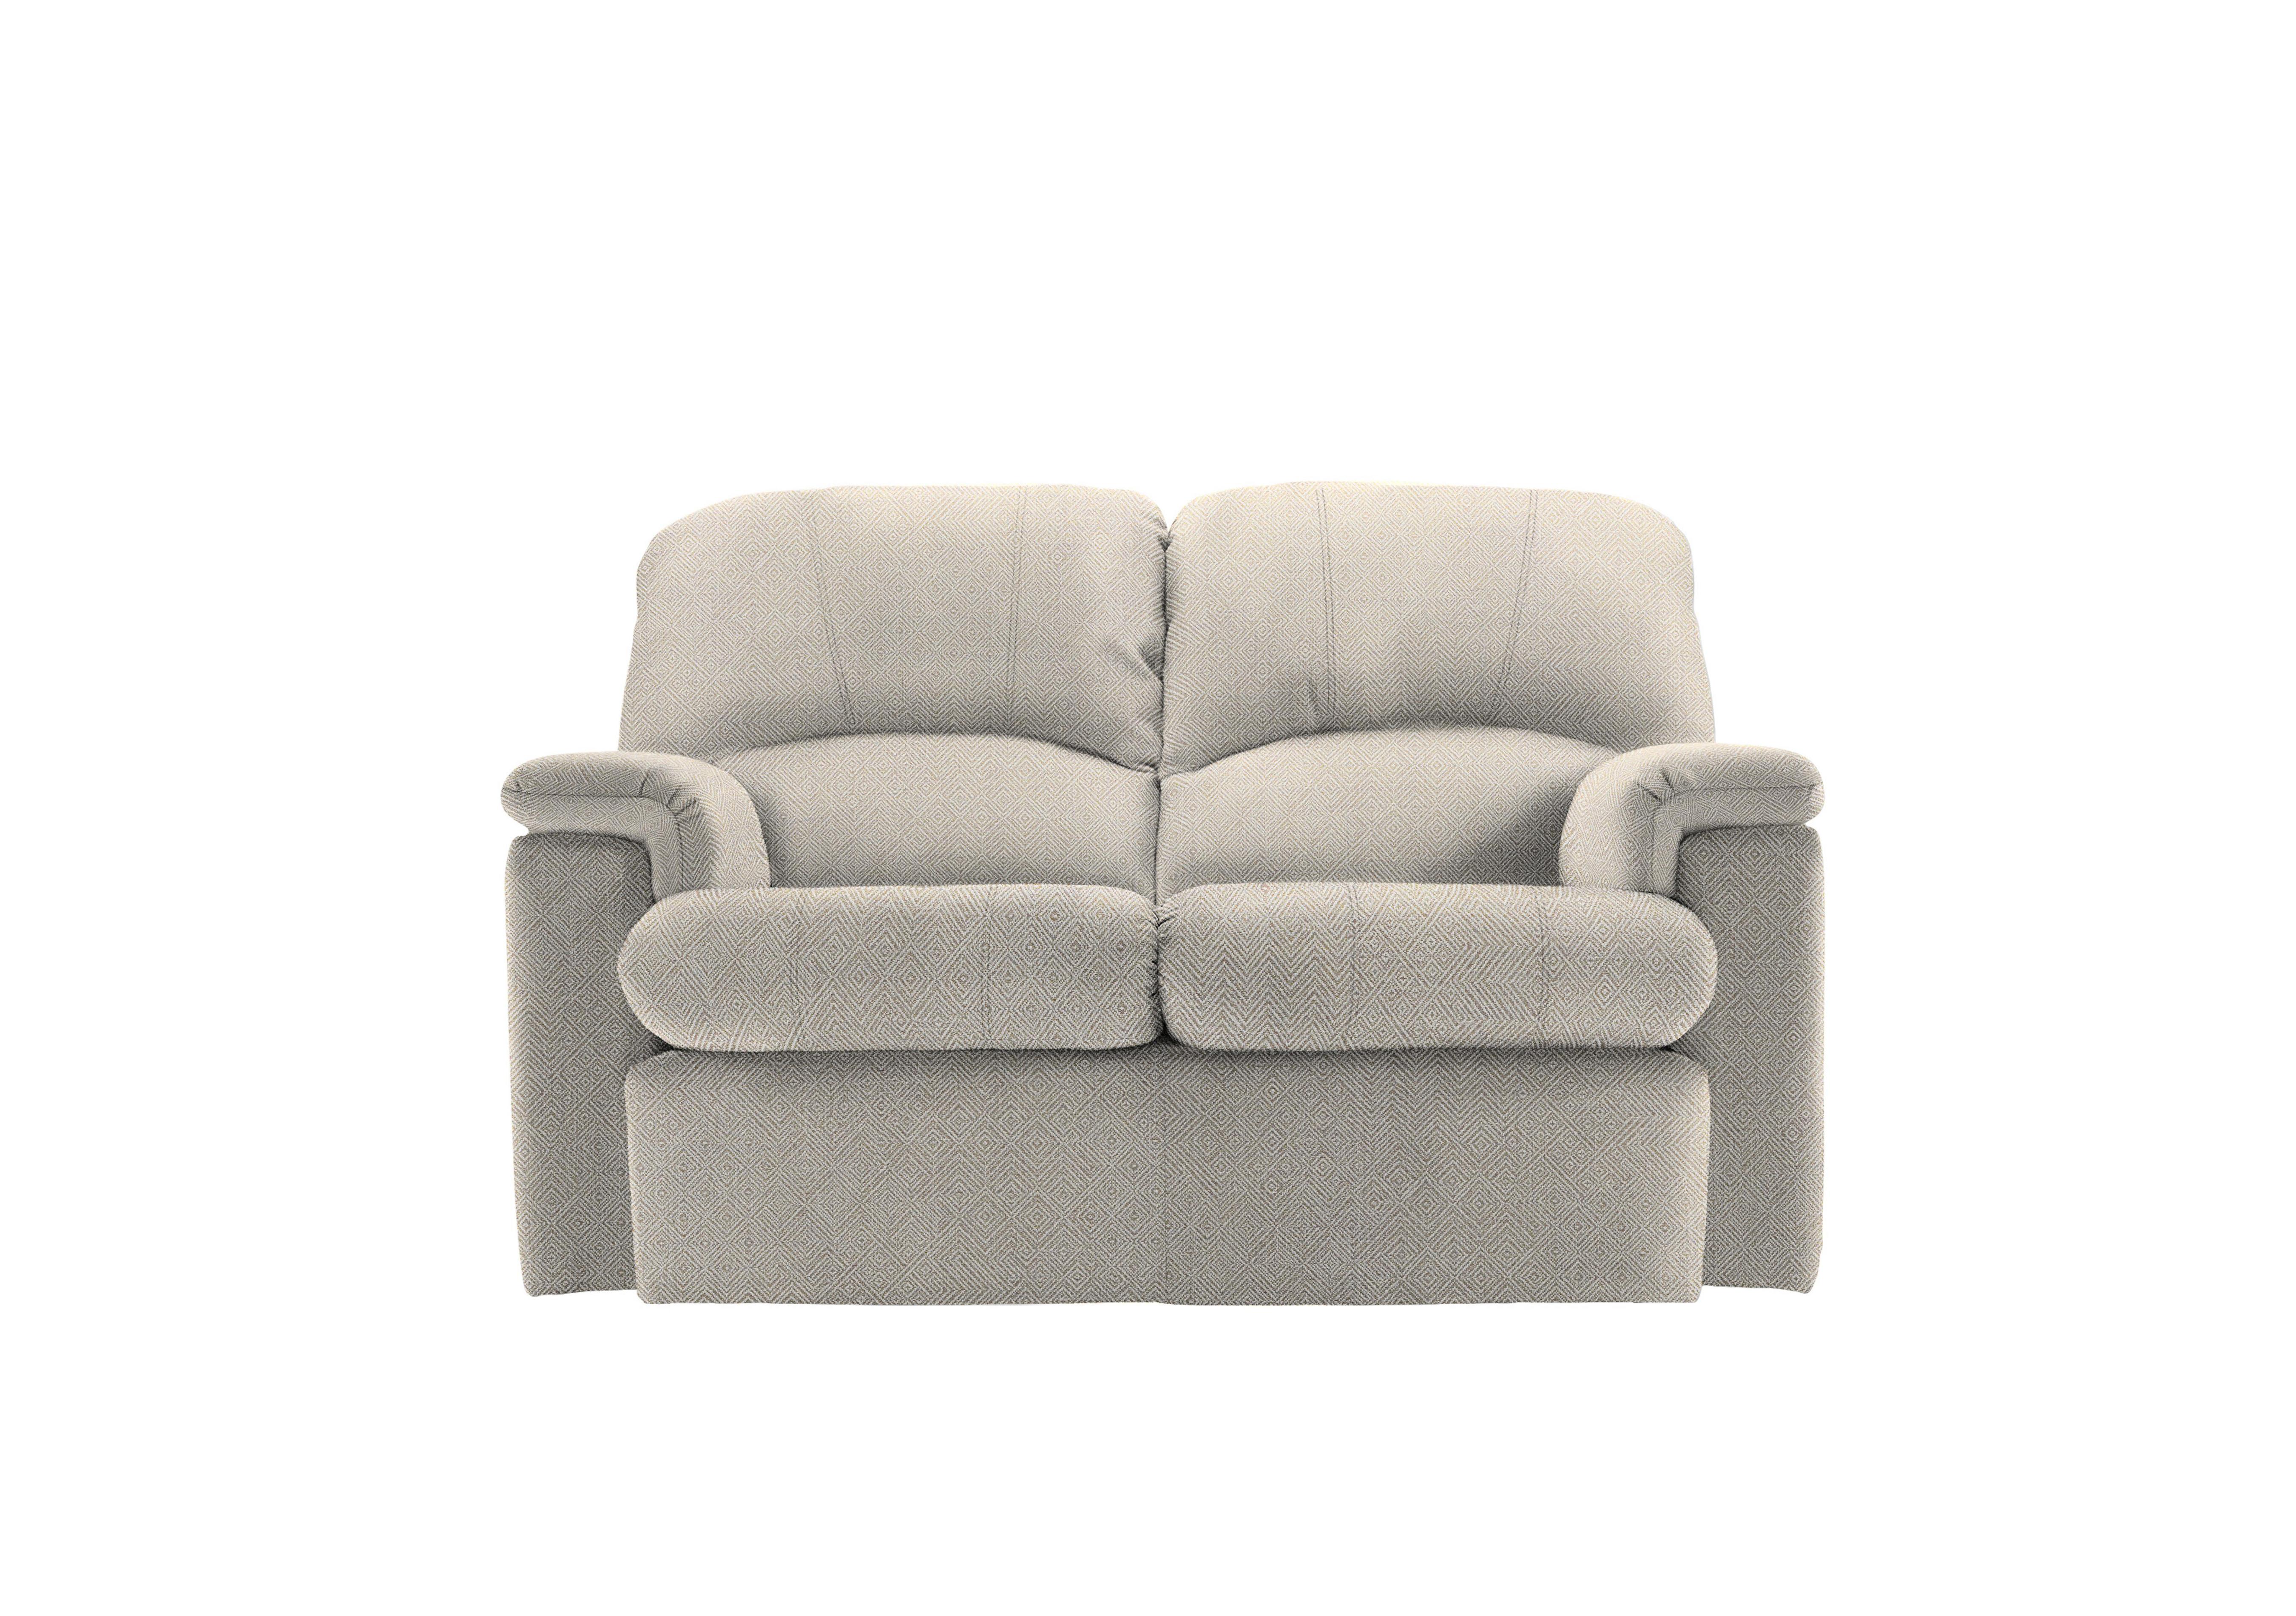 Chloe Small Fabric 2 Seater Sofa in B011 Nebular Blush on Furniture Village